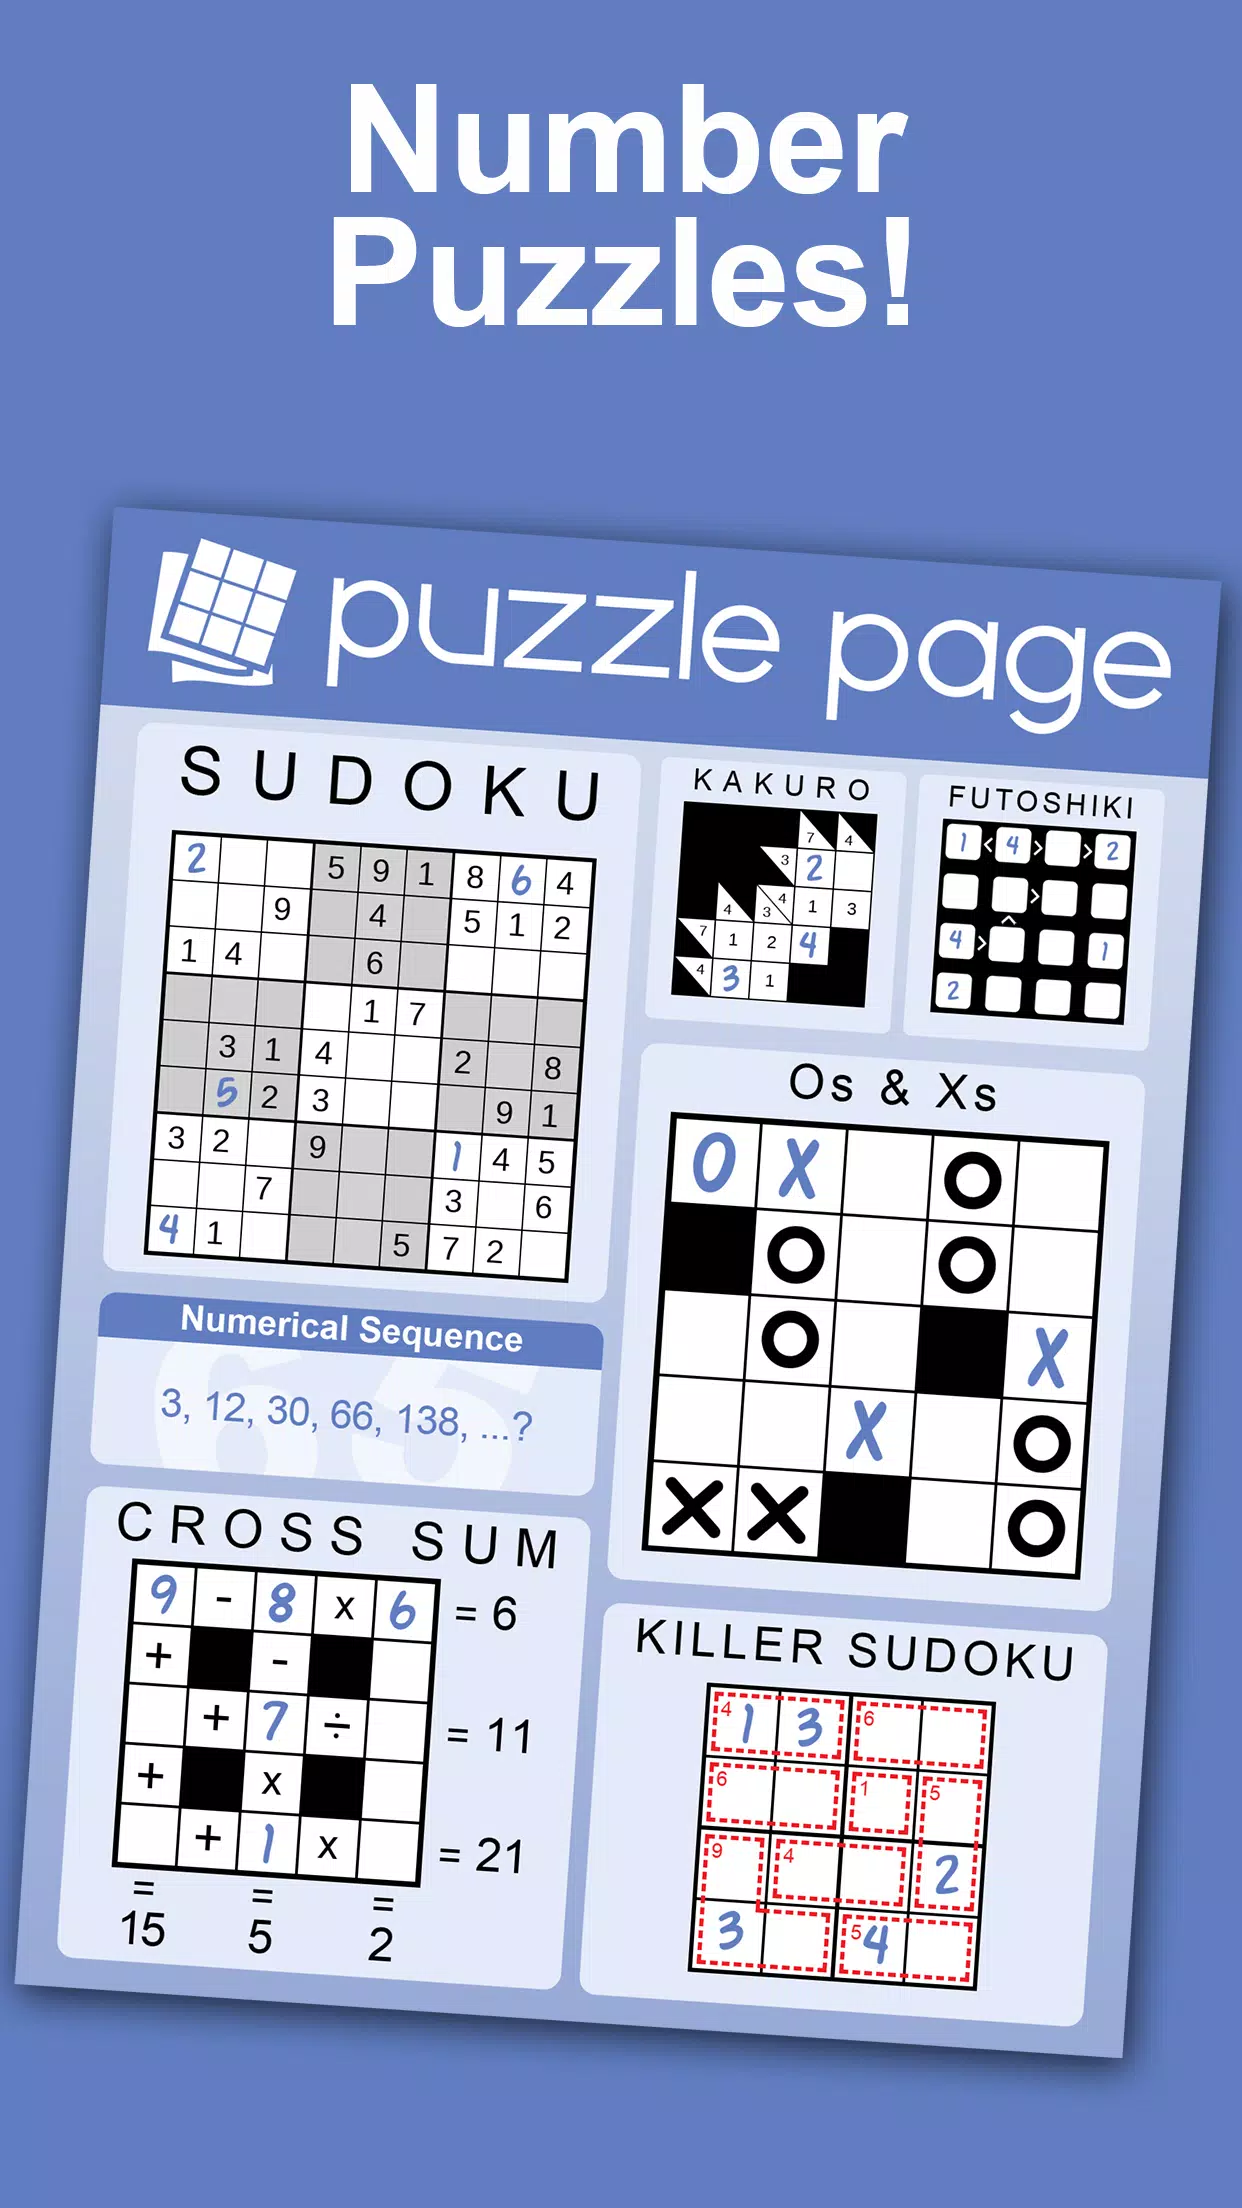 FREE MOD - Sudoku Pro v1.2 (MOD, Paid, Mod Hints / Ad Free Unlock) APK